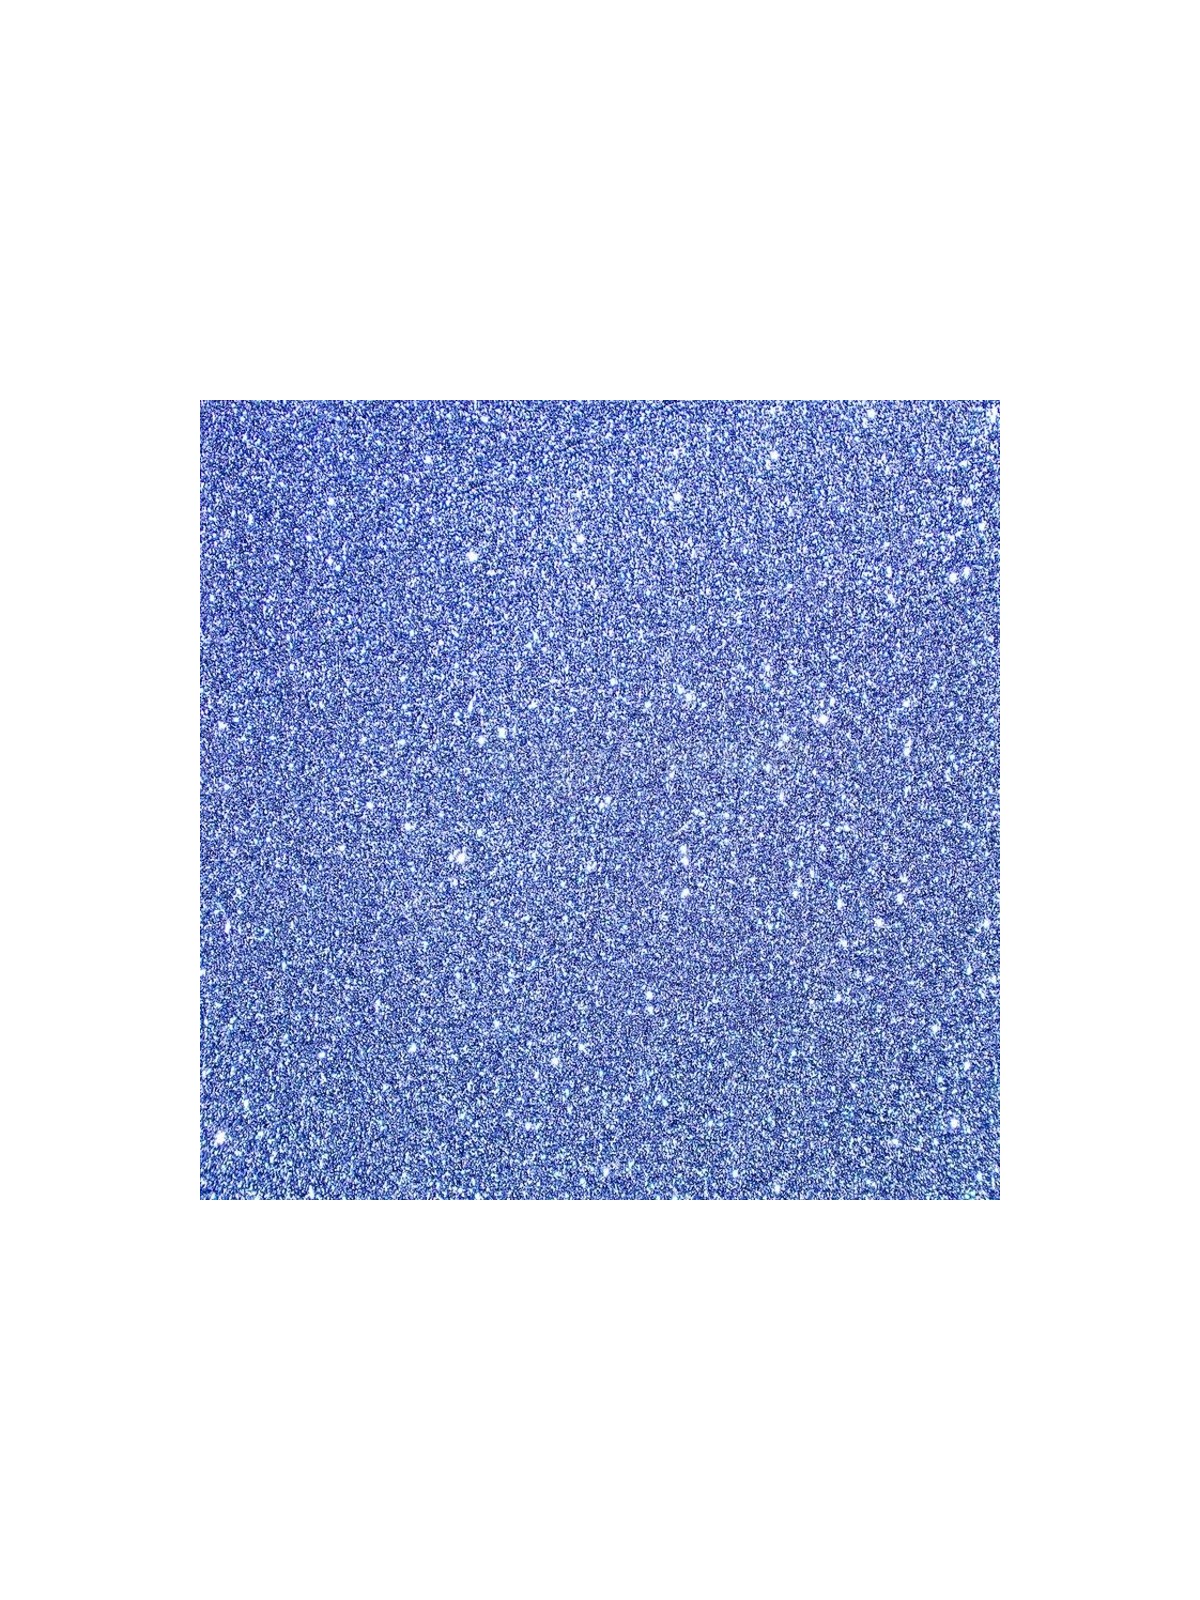 Sugarcity decorative glitter Twilight Blue Glitter 10ml